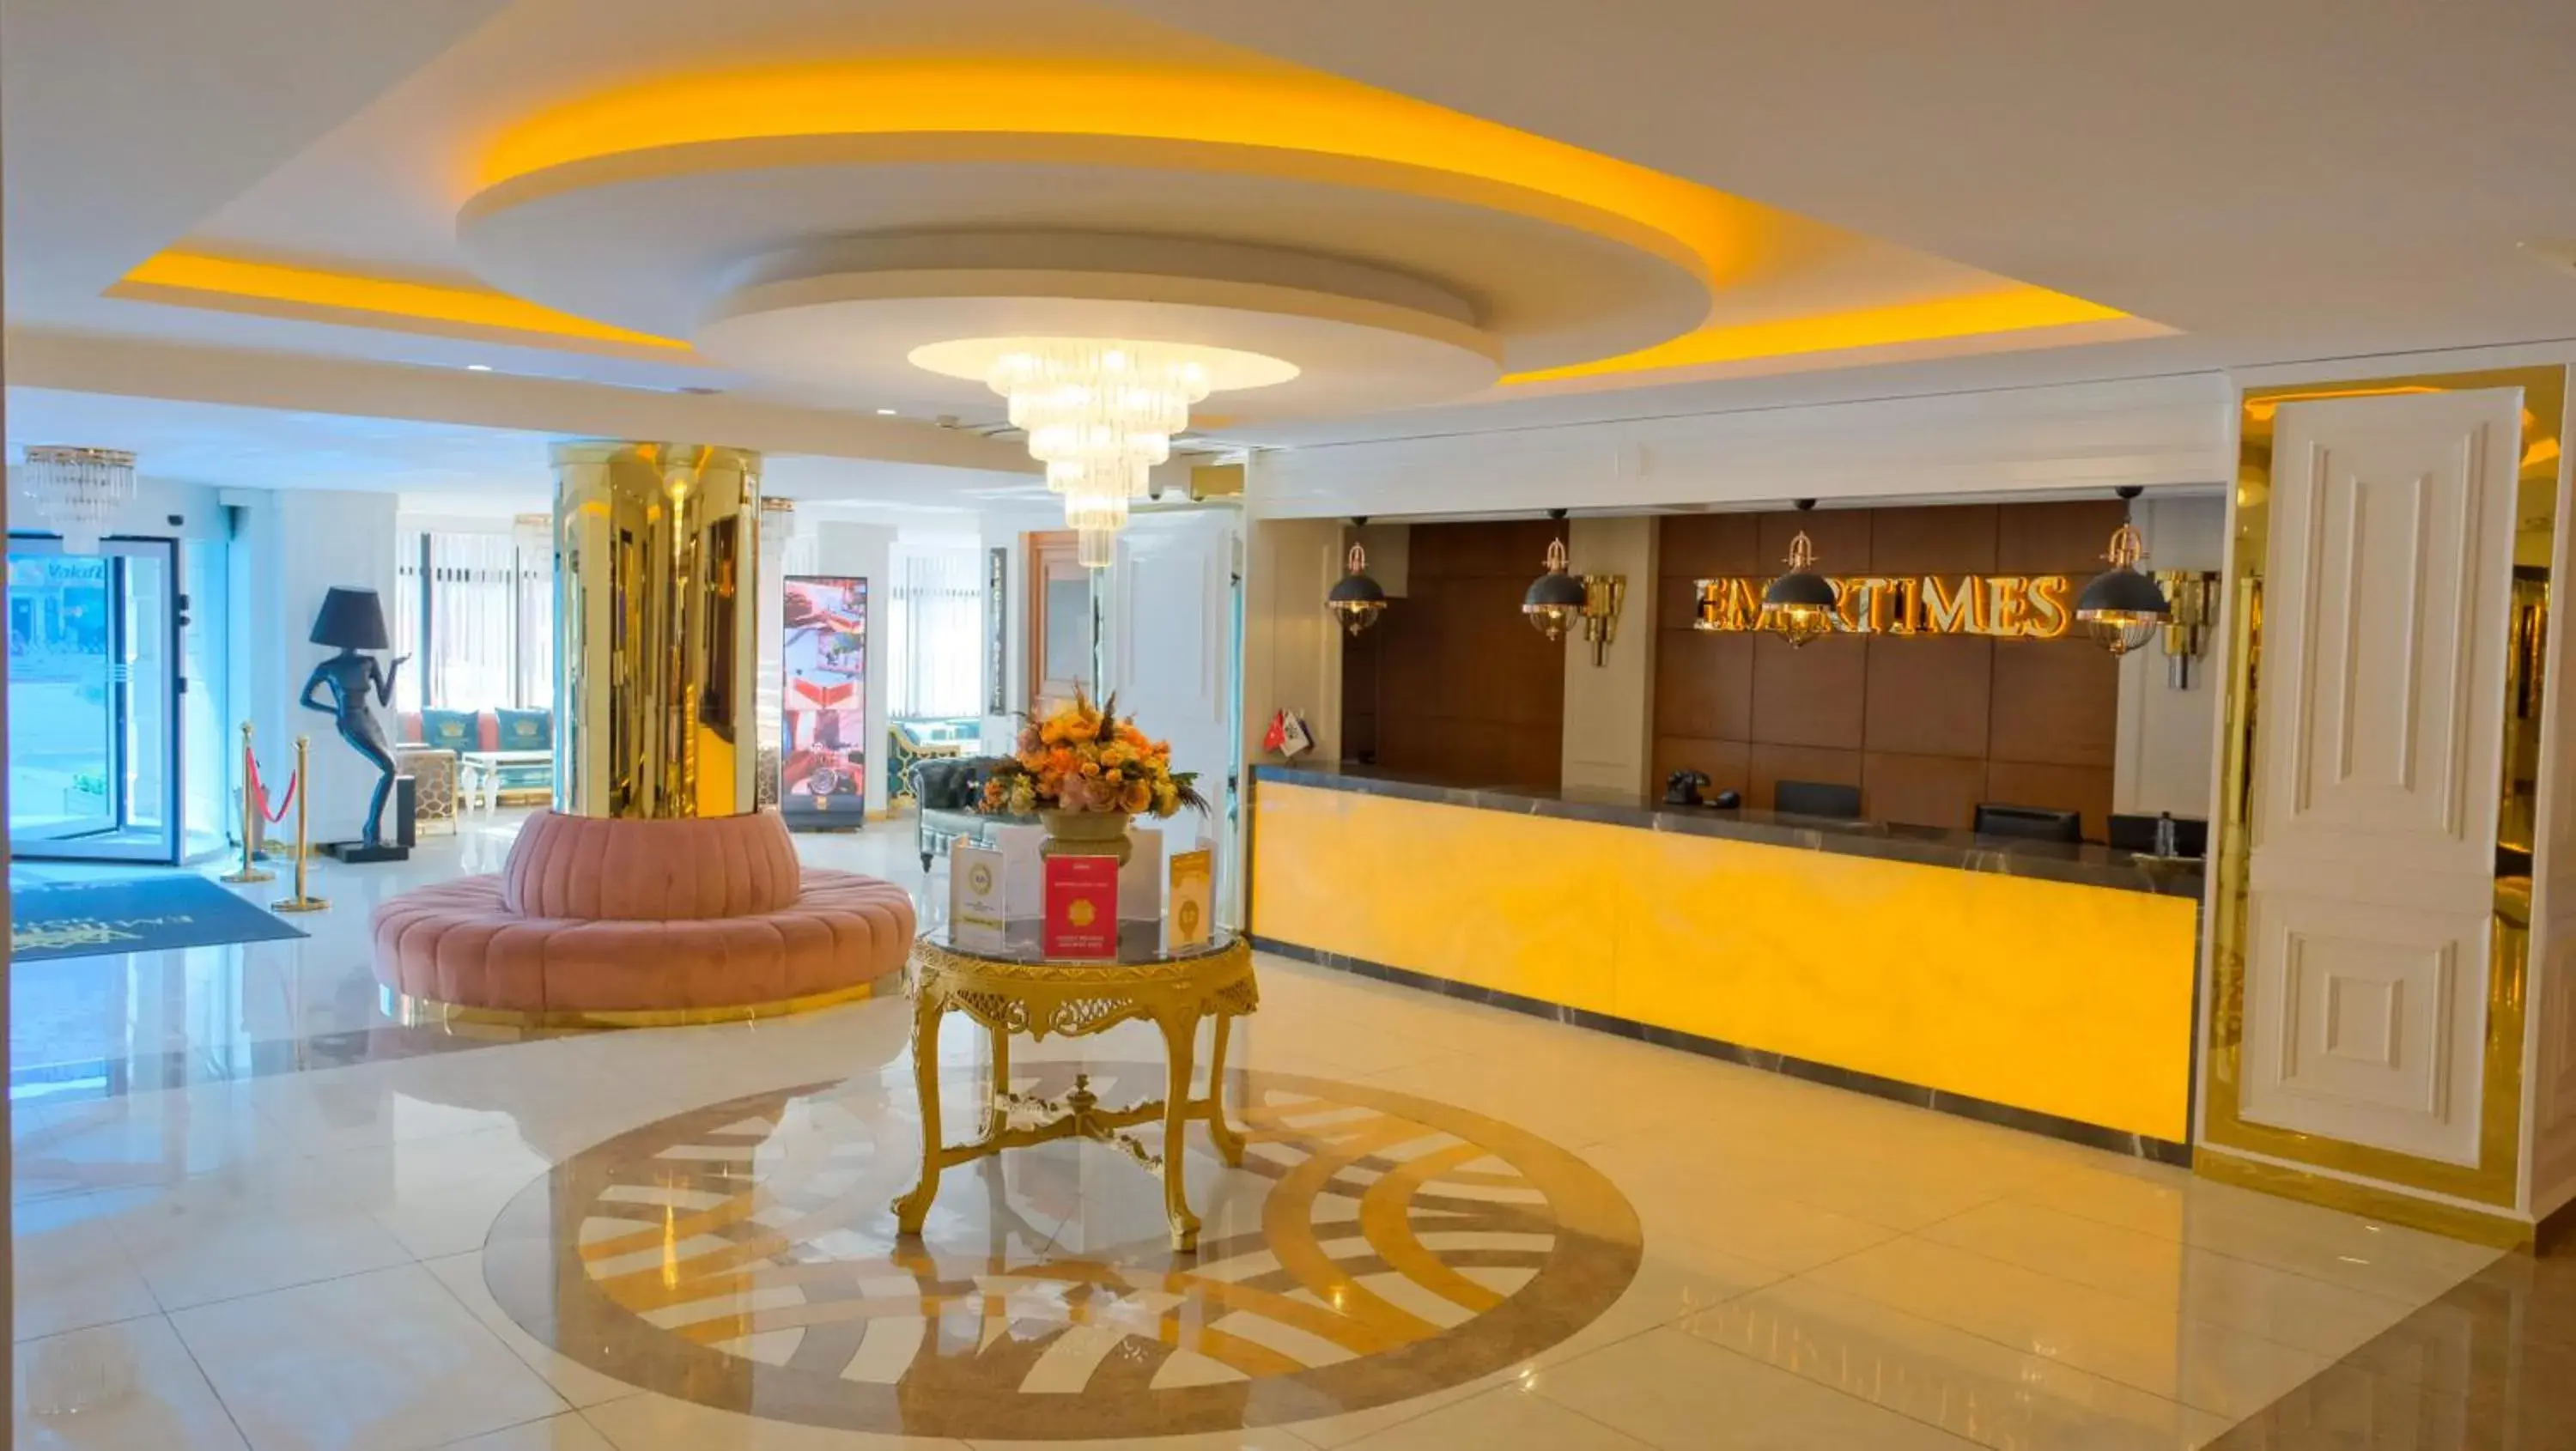 Lobby or reception, Lobby/Reception in Emirtimes Hotel&Spa - Tuzla